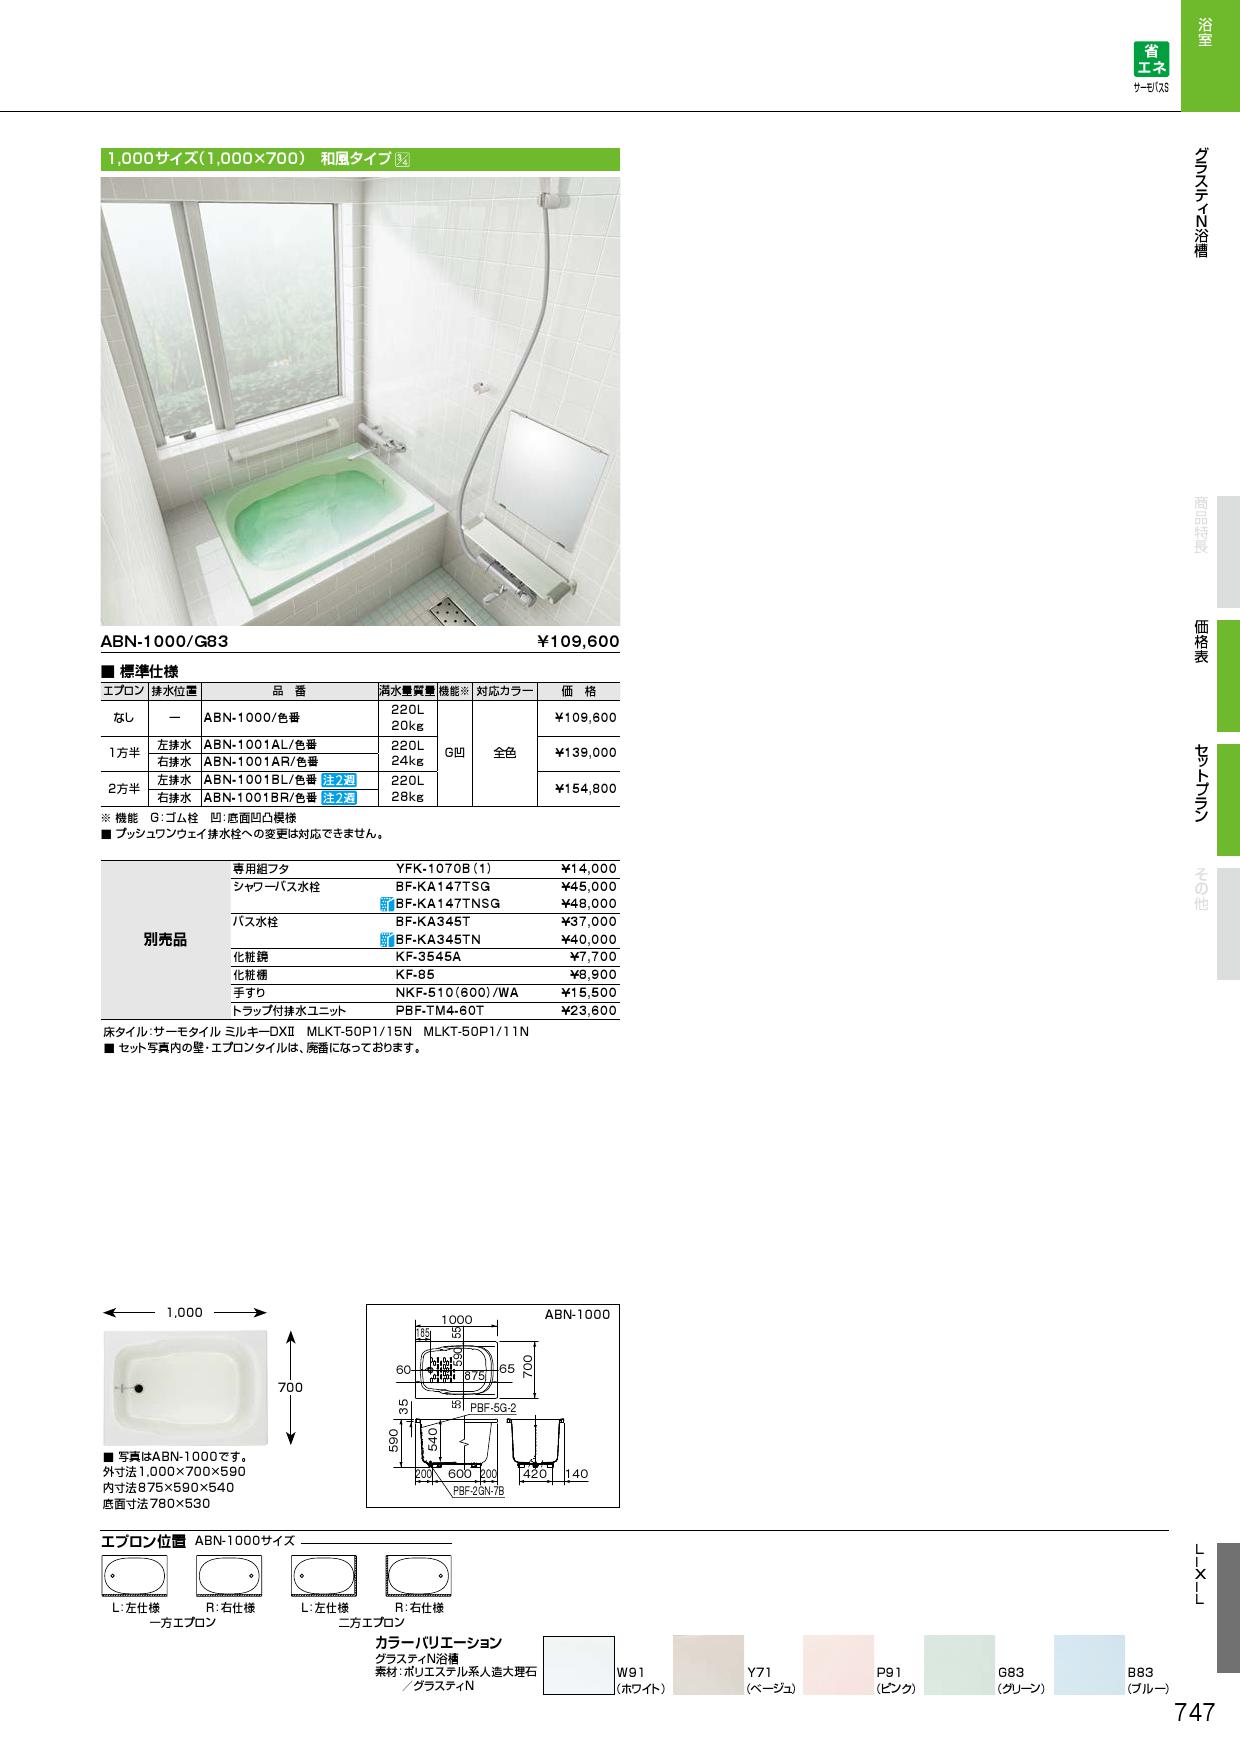 ABN-1001BR】 リクシル グラスティN浴槽(二方半エプロン) яз∠ abn-1001br アールホームマート !店  通販 